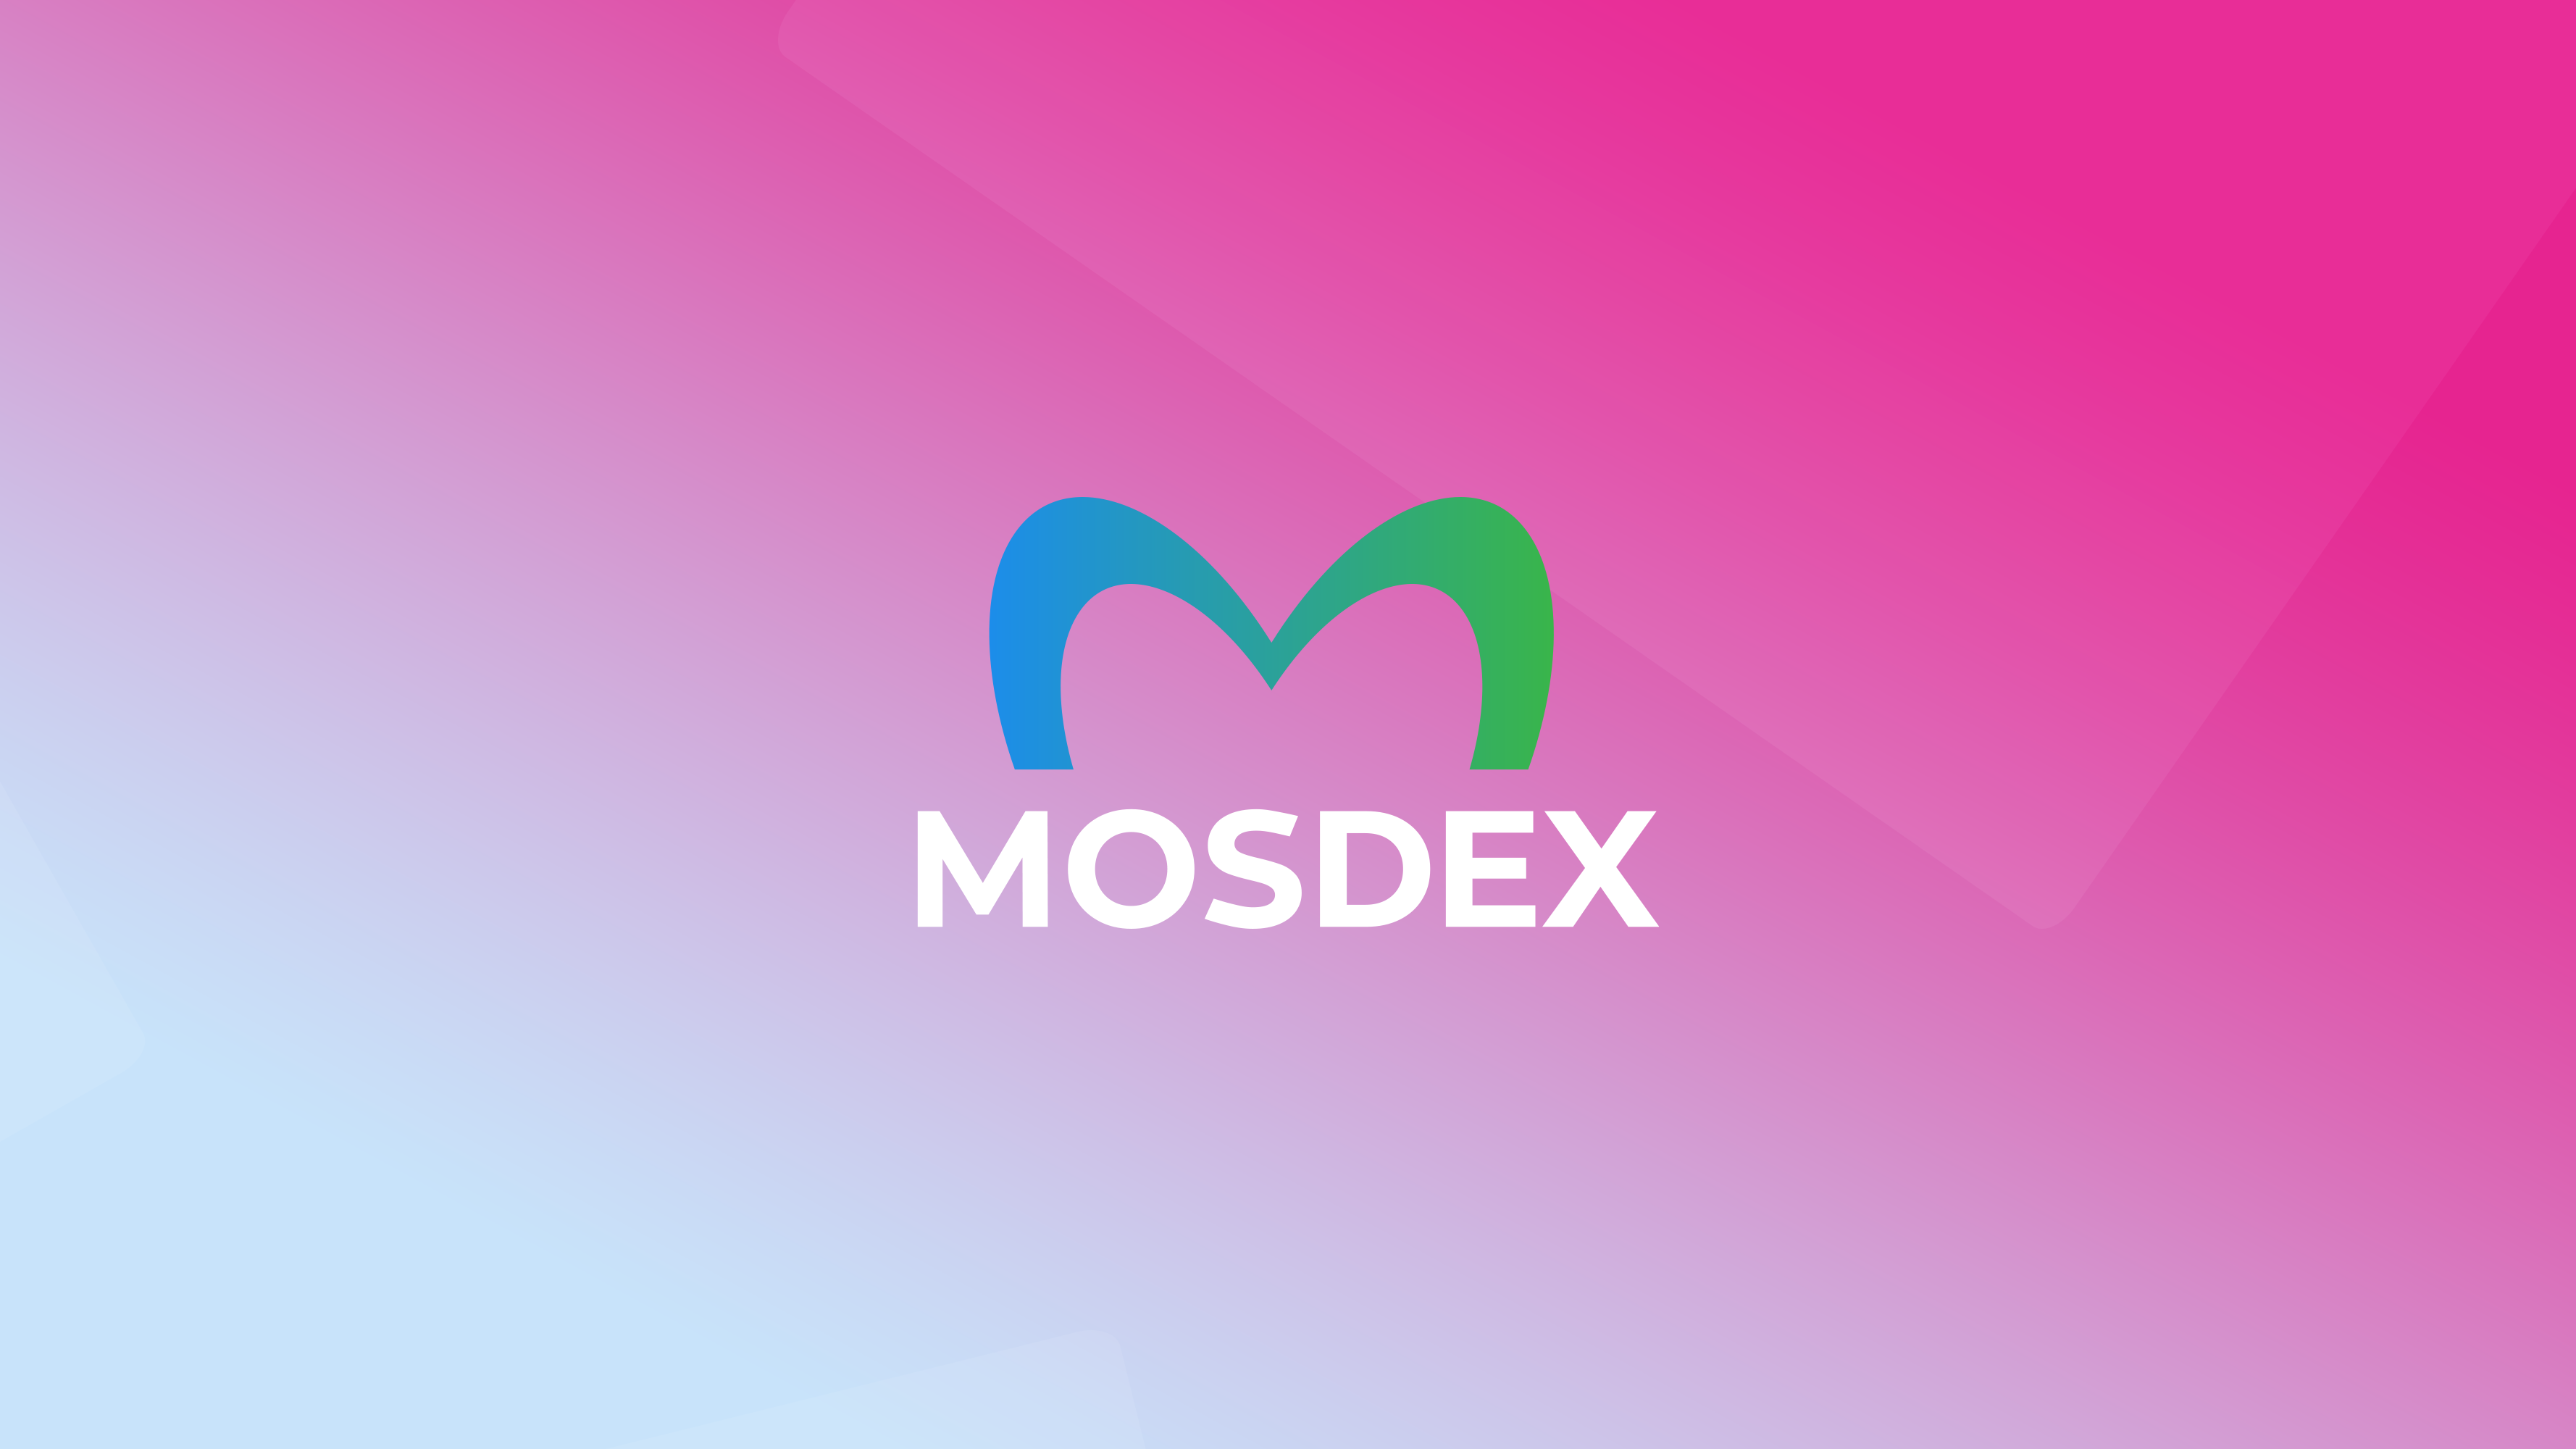 January 2023 Mosdex Updates - Crypto Arbitrage Platform Announces Various Developments To Fuel Growth